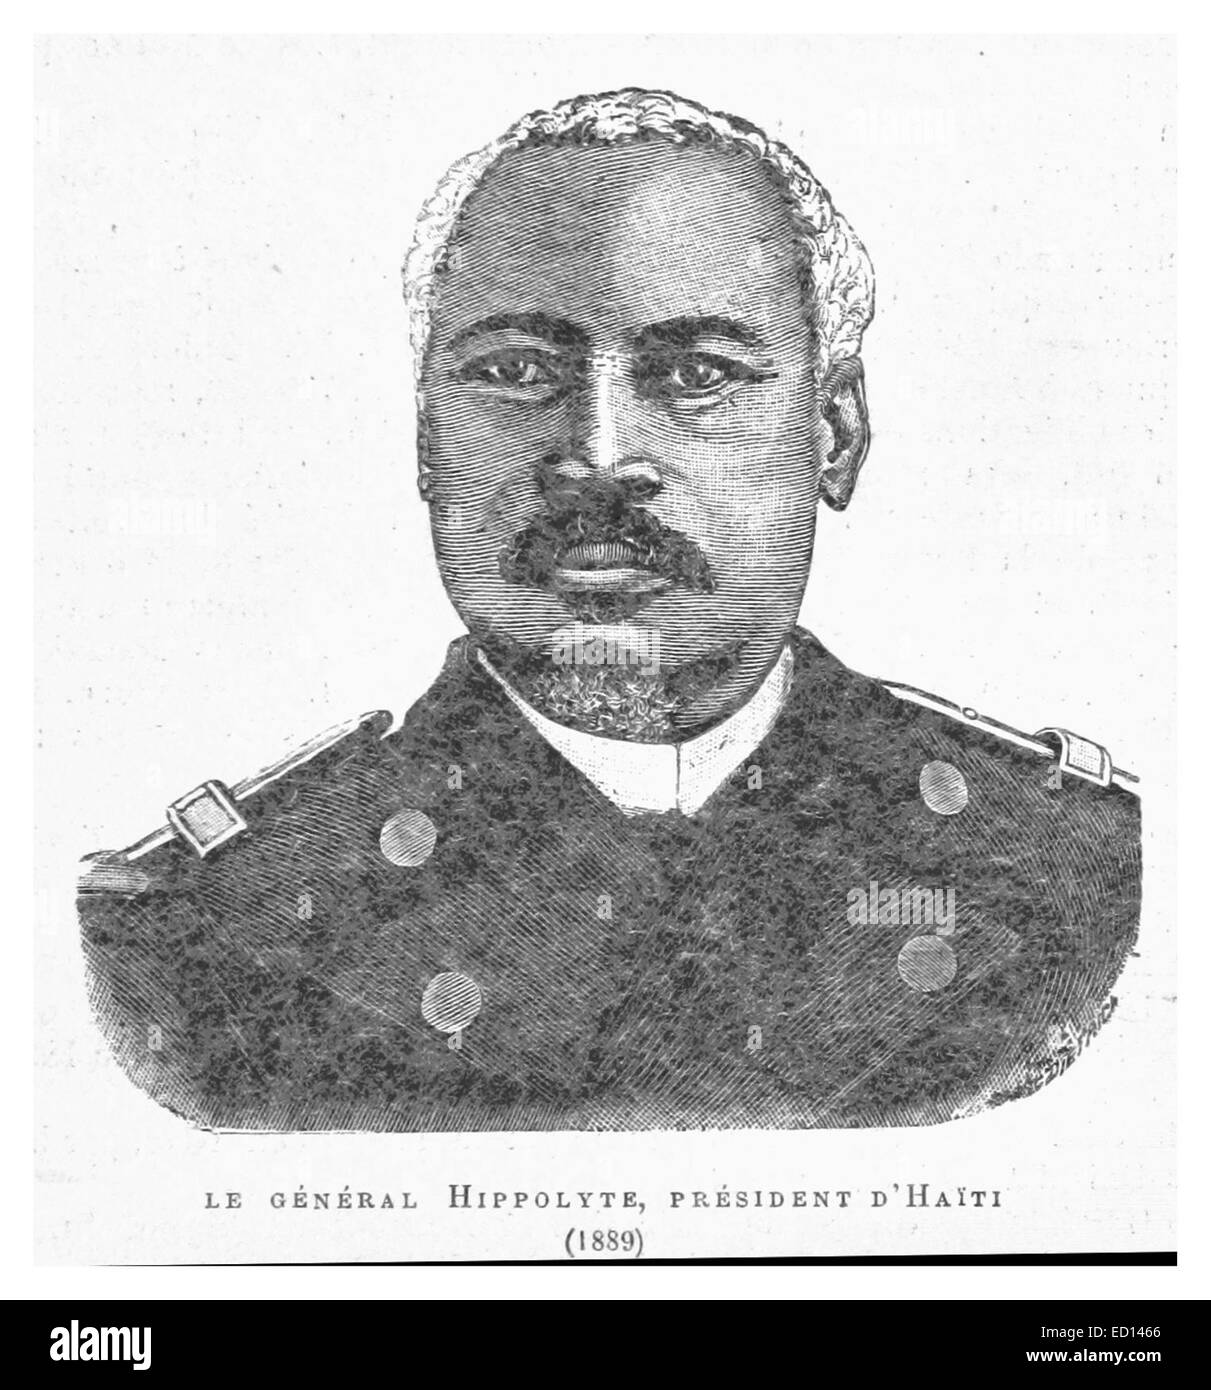 Le General Hippolyte (Presidente d'Haiti 1889) Foto Stock